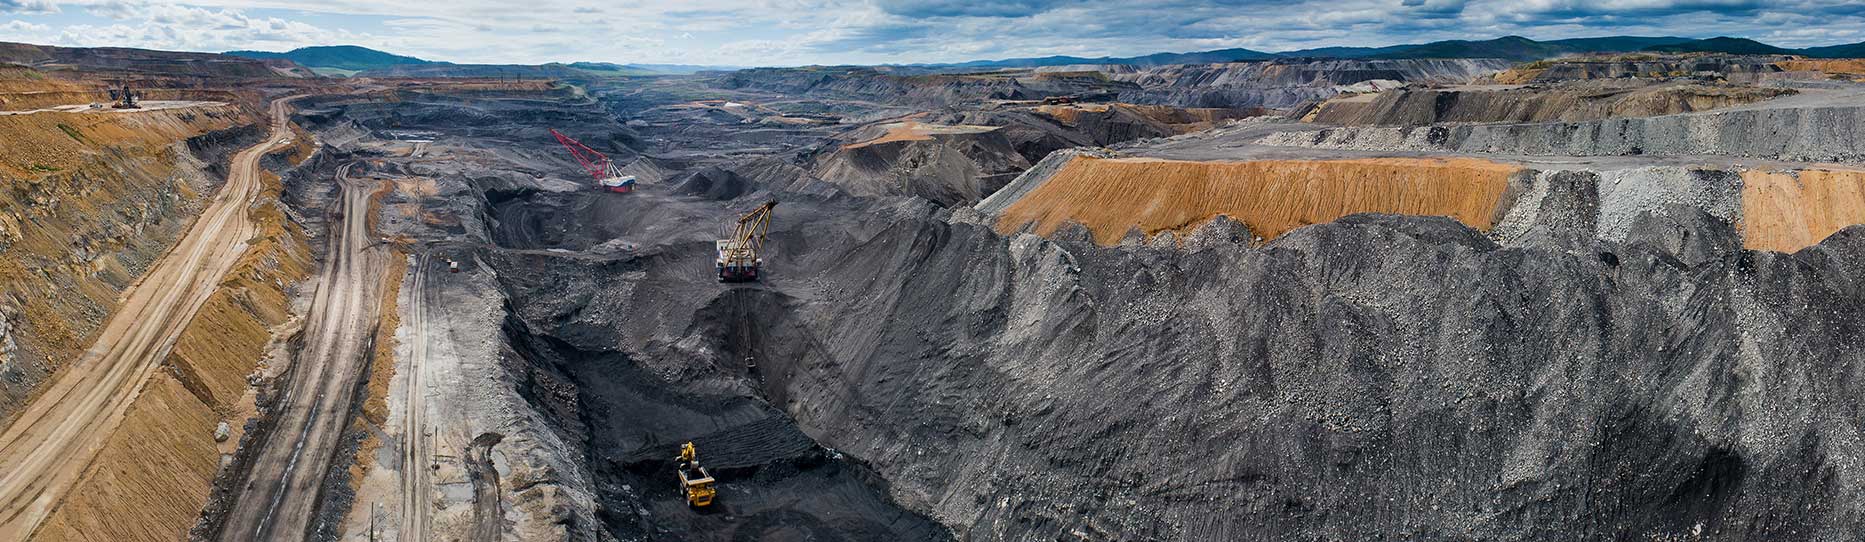 Coal mining in an open pit mine